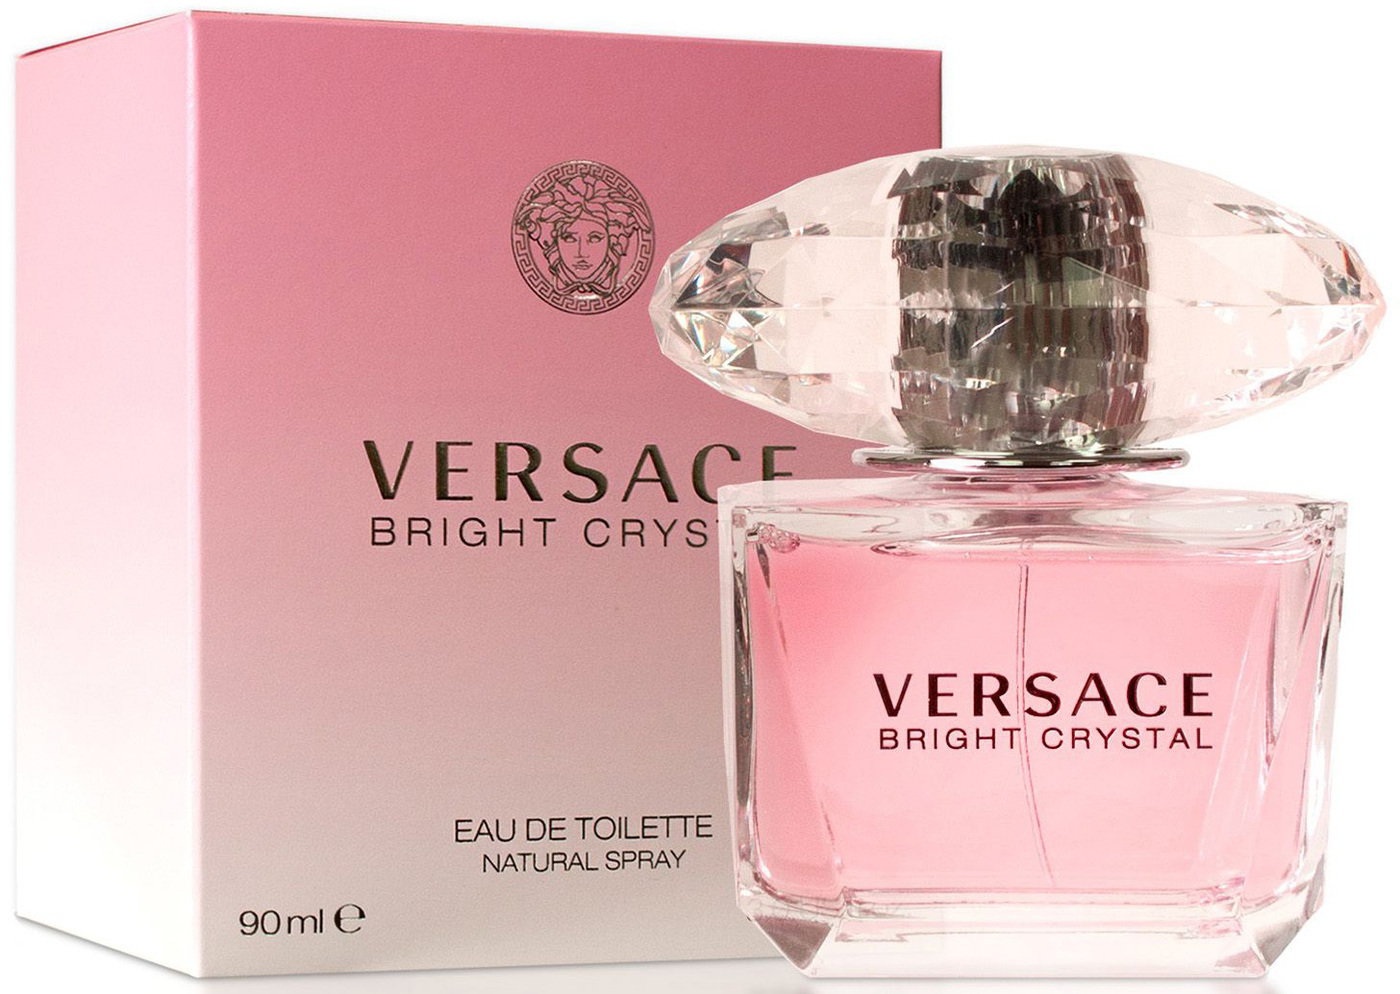 Кристалл духи отзывы. Версаче Брайт Кристалл 90 мл. Туалетная вода Bright Crystal Versace 90ml. Versace - Bright Crystal Eau de Toilette 90 мл. Versace Bright Crystal Версаче Брайт духи 90мл.